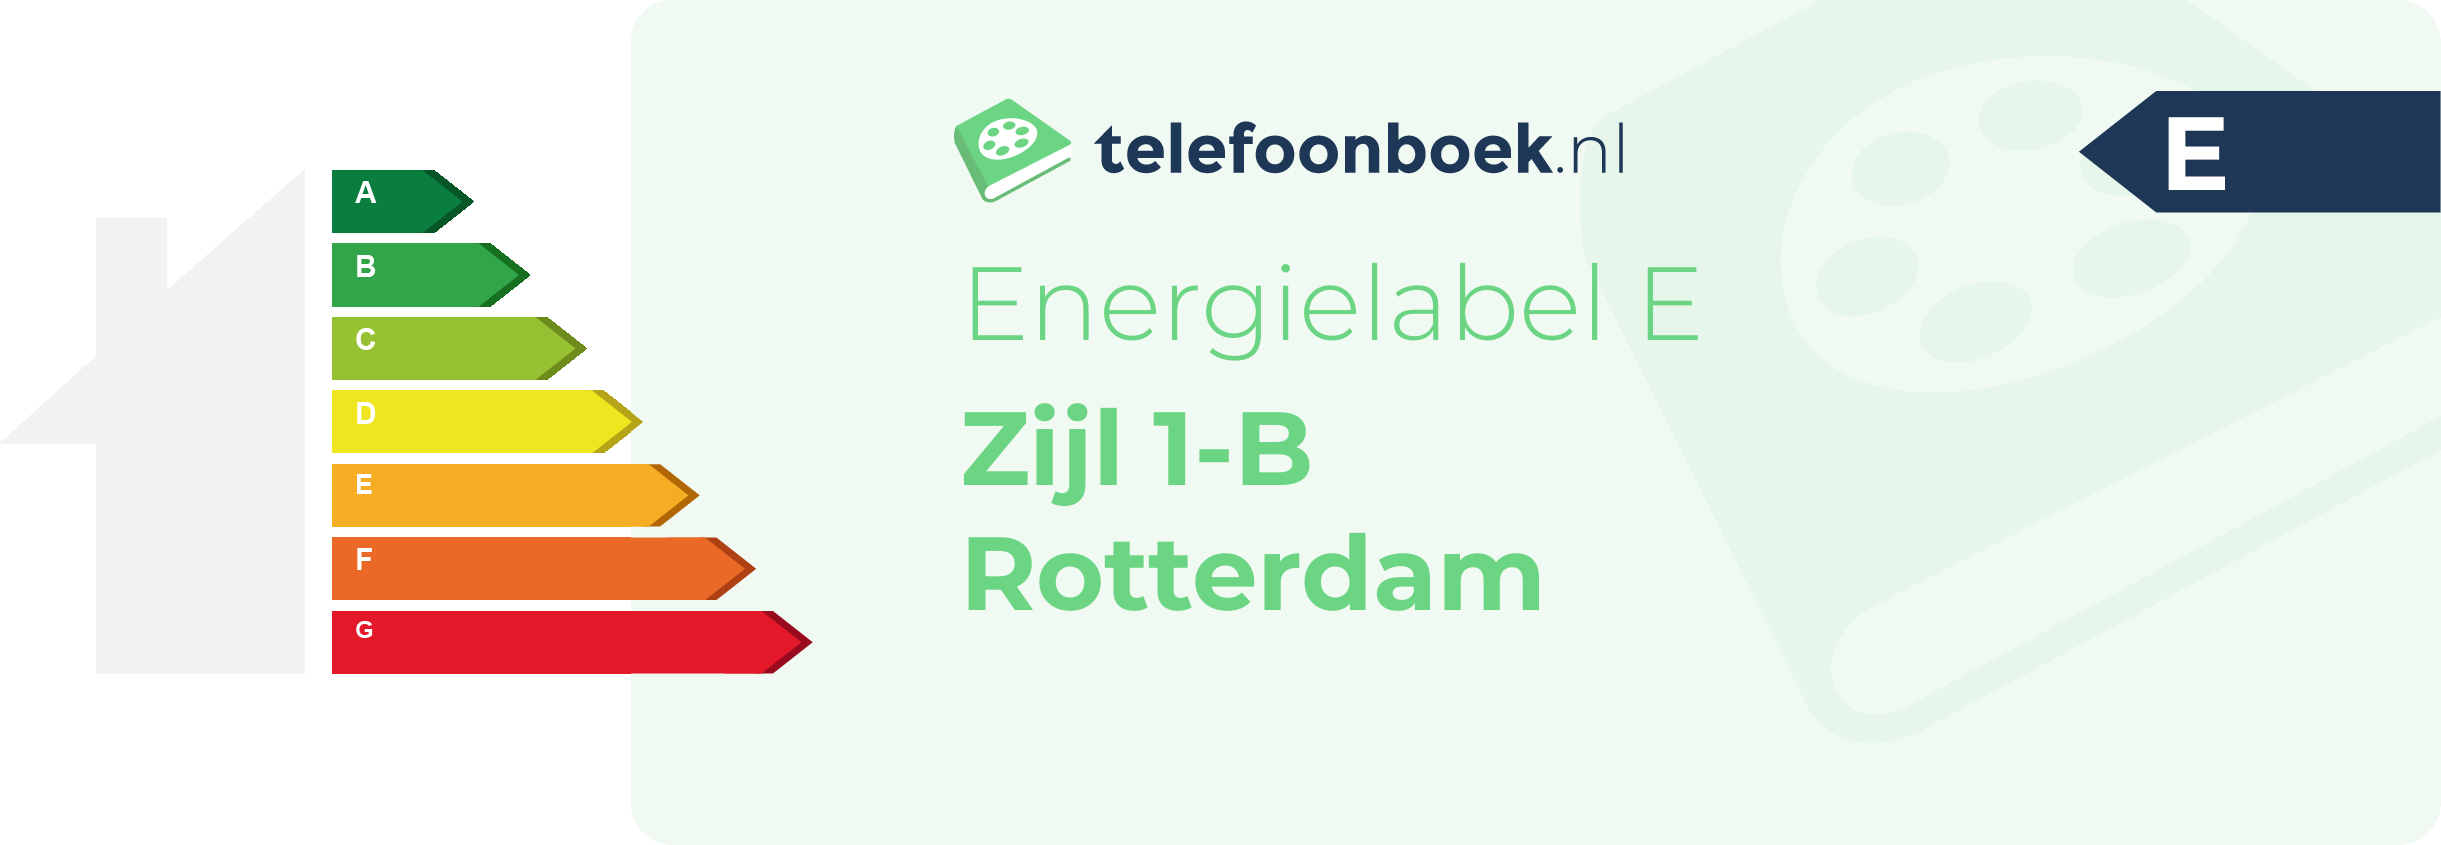 Energielabel Zijl 1-B Rotterdam